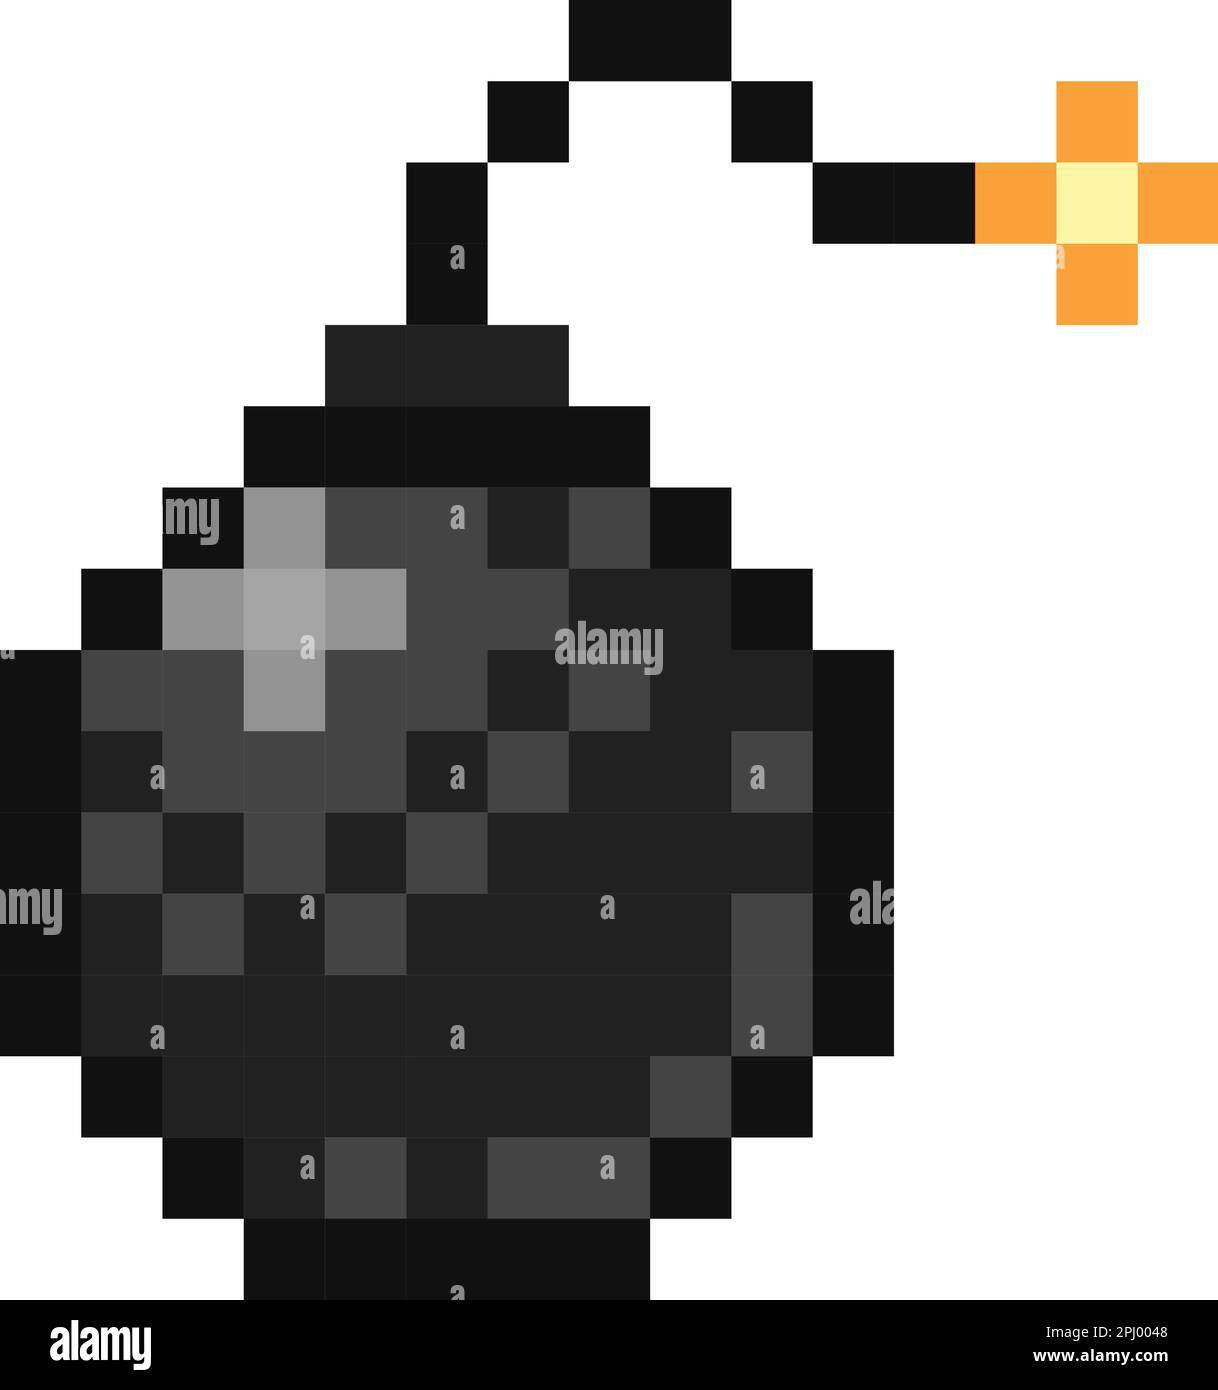 Black bomb pixel art. Flaming cannonball retro game style logo. Vector illustration Stock Vector